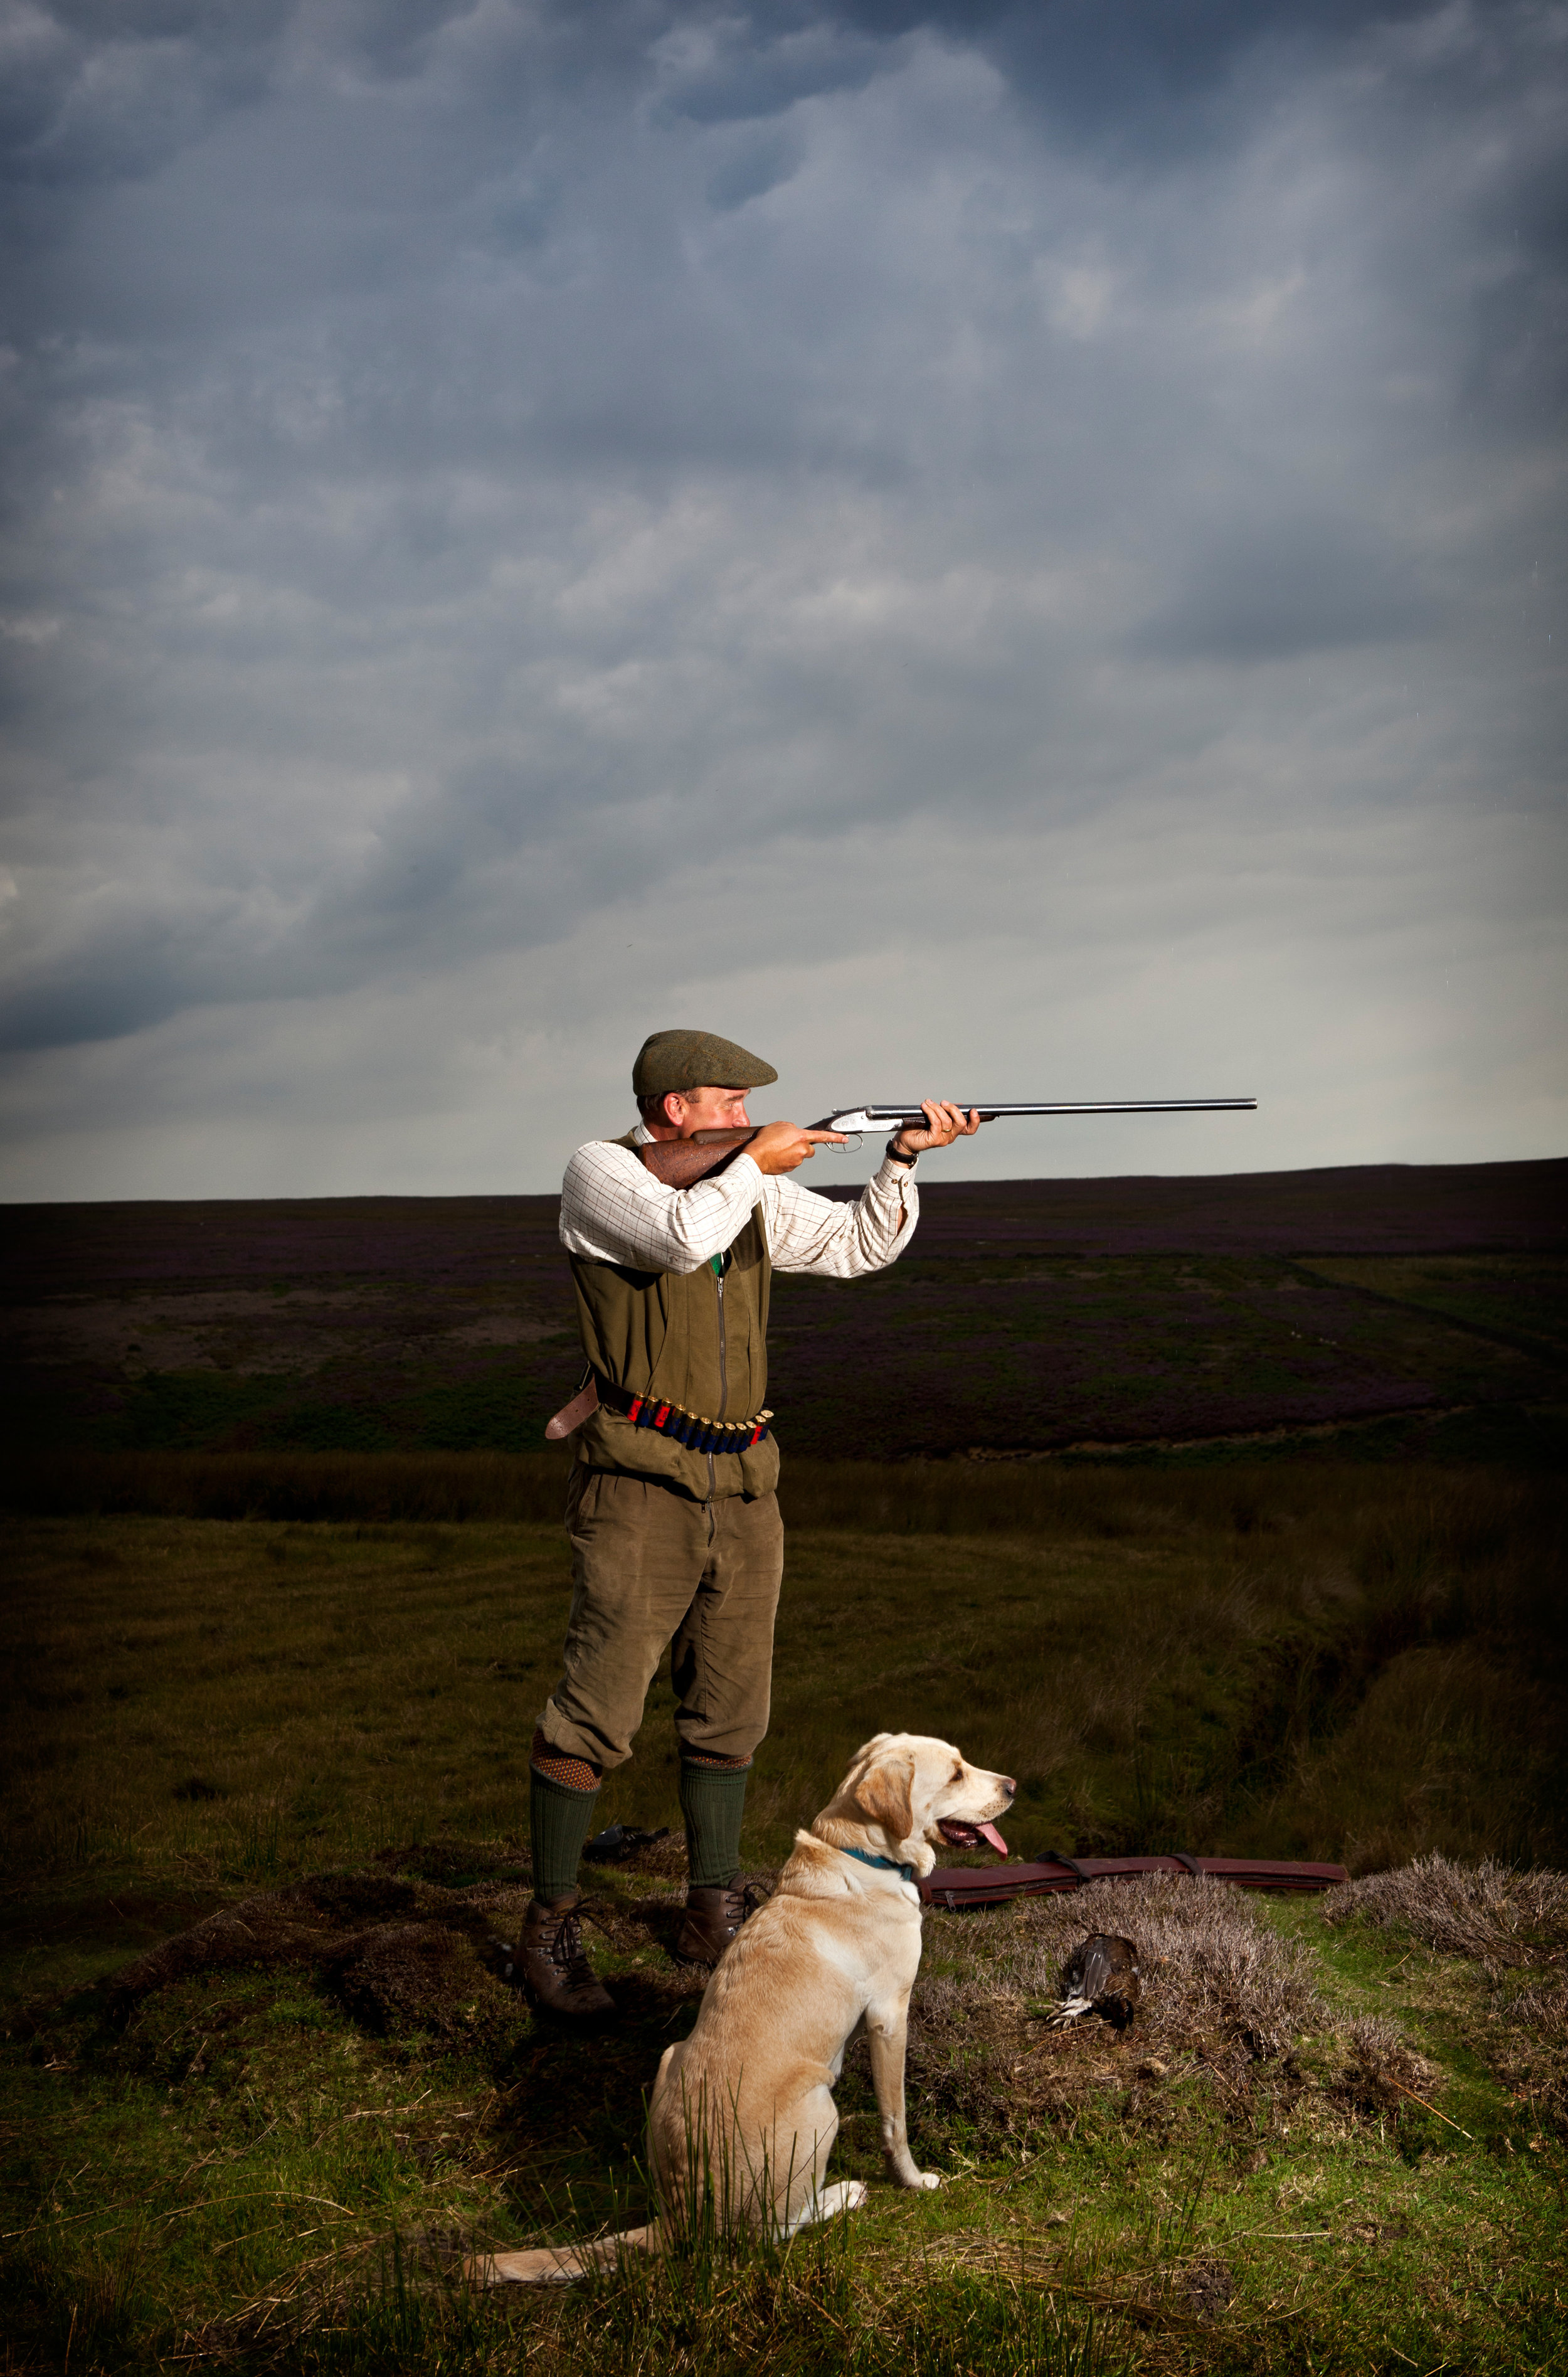 Grouse shooting, Swinton Park, North Yorkshire moors, UK.jpg